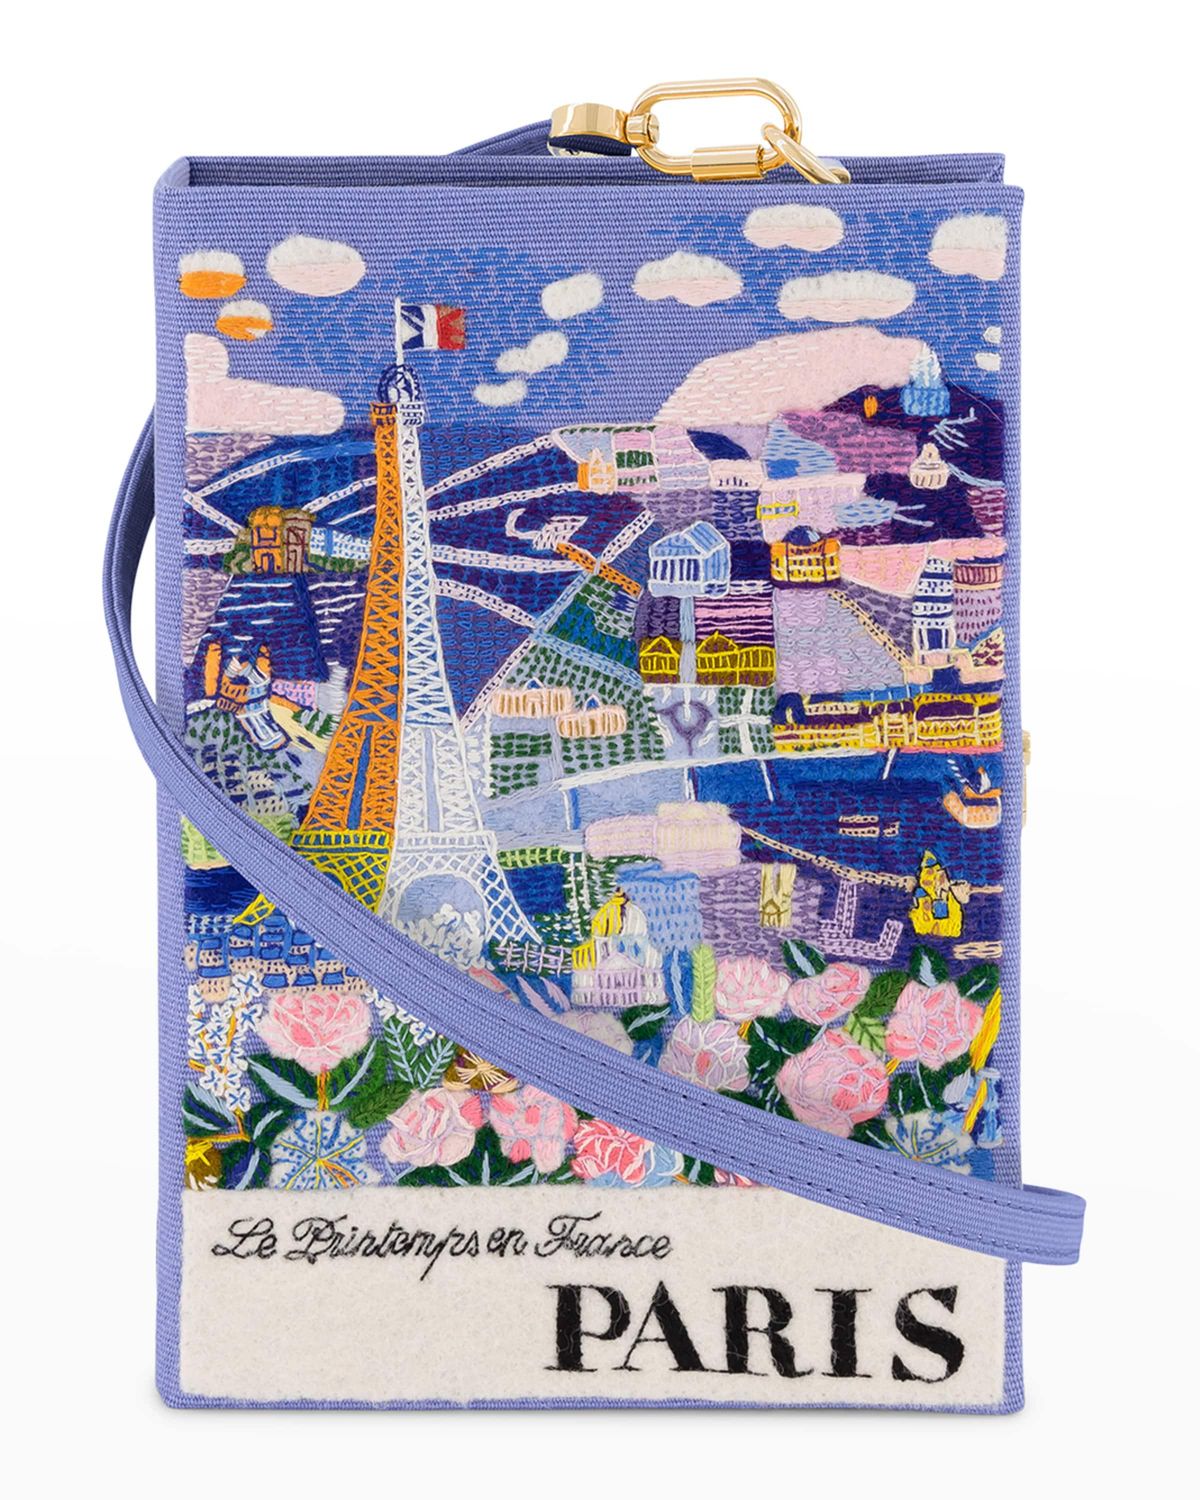 Paris Raoul Dufy Book Clutch Bag